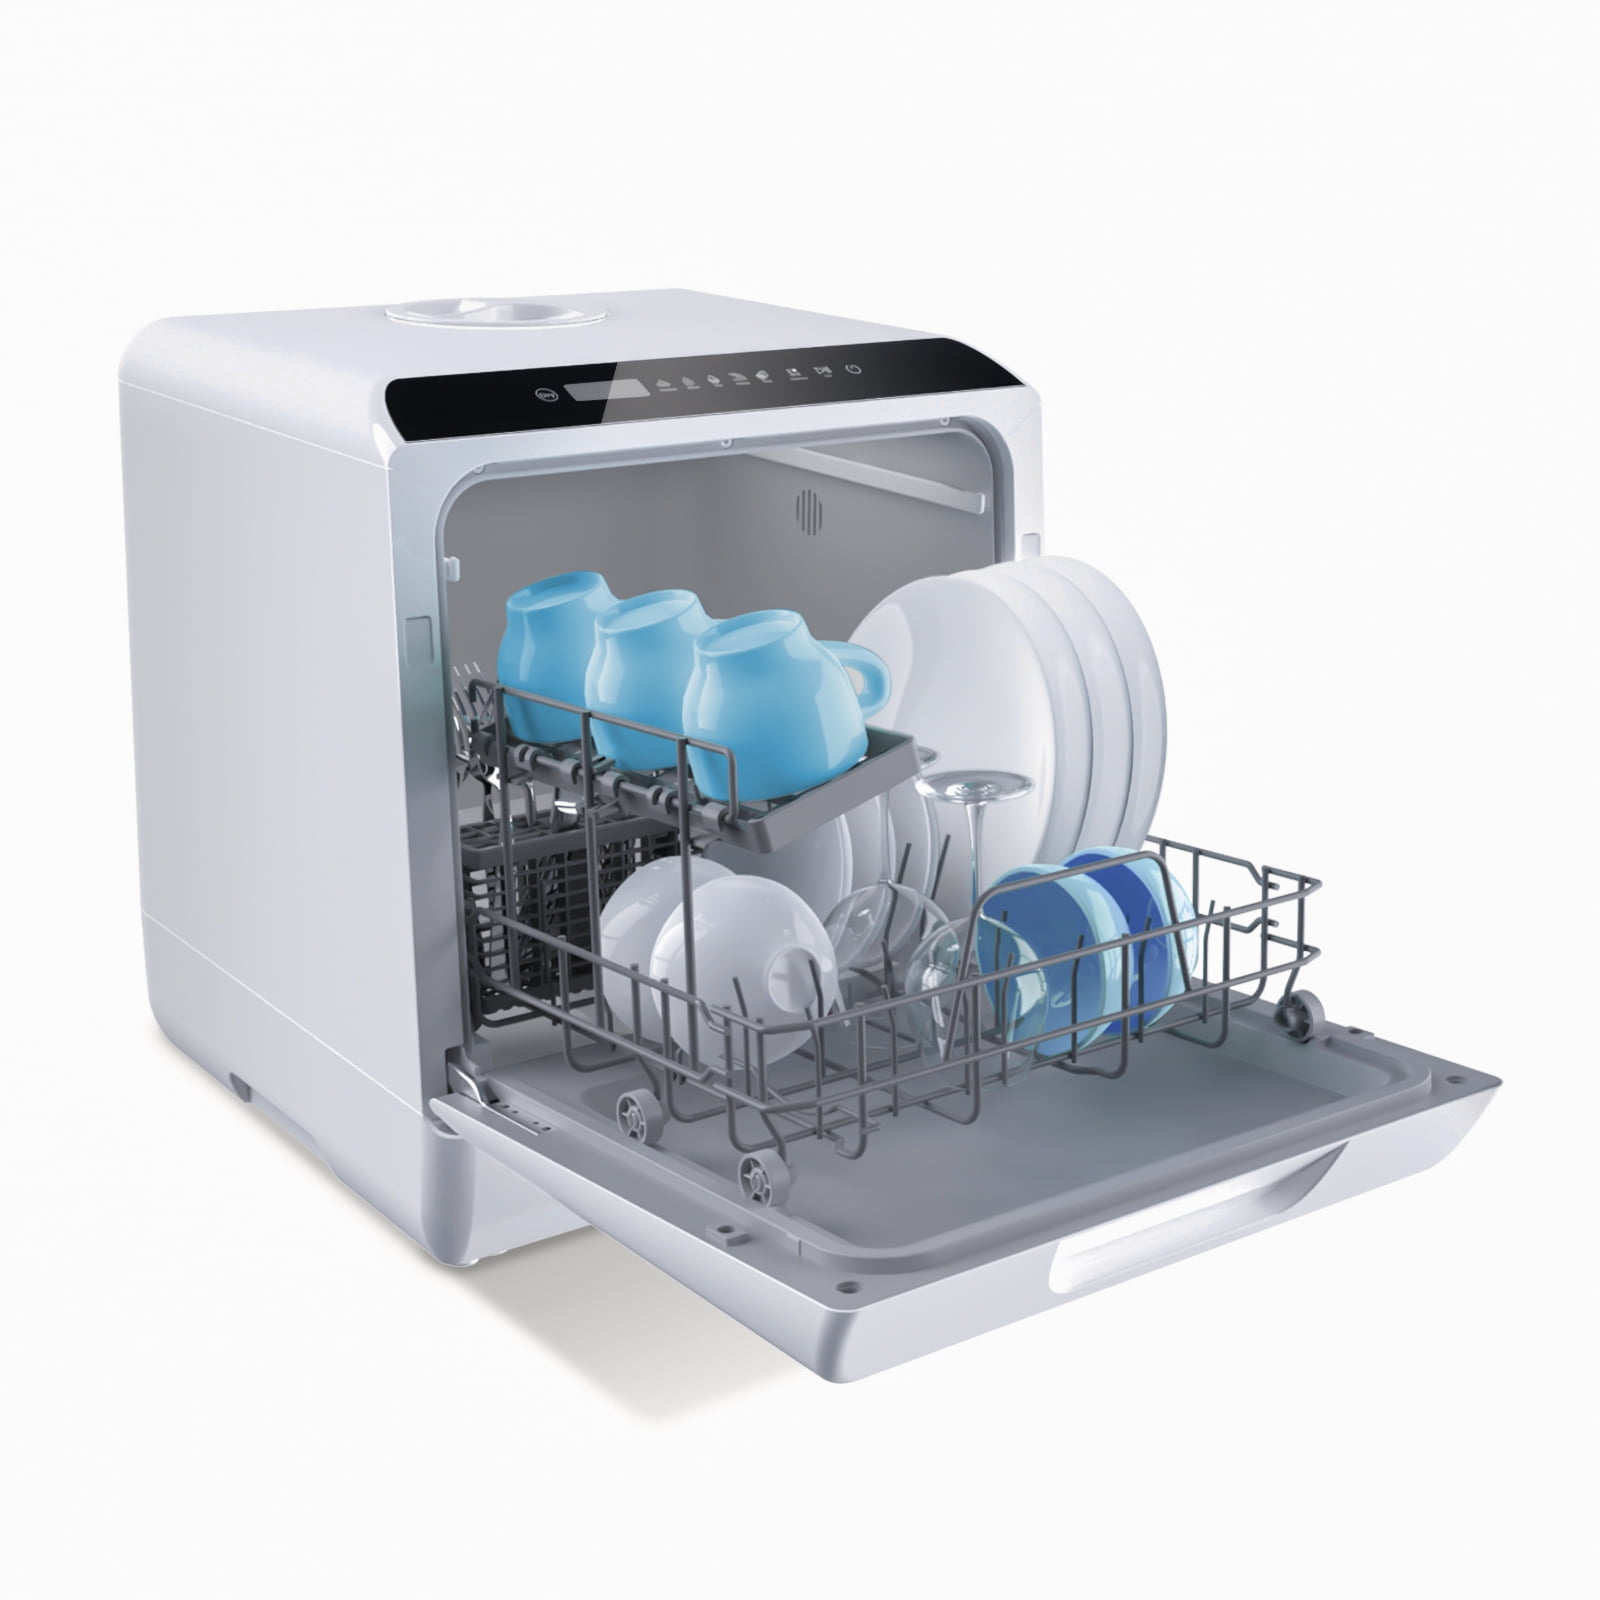 ✓NOVETE Portable Dishwasher VS Hermitlux Portable Dishwasher - Which  Dishwasher is the best? 